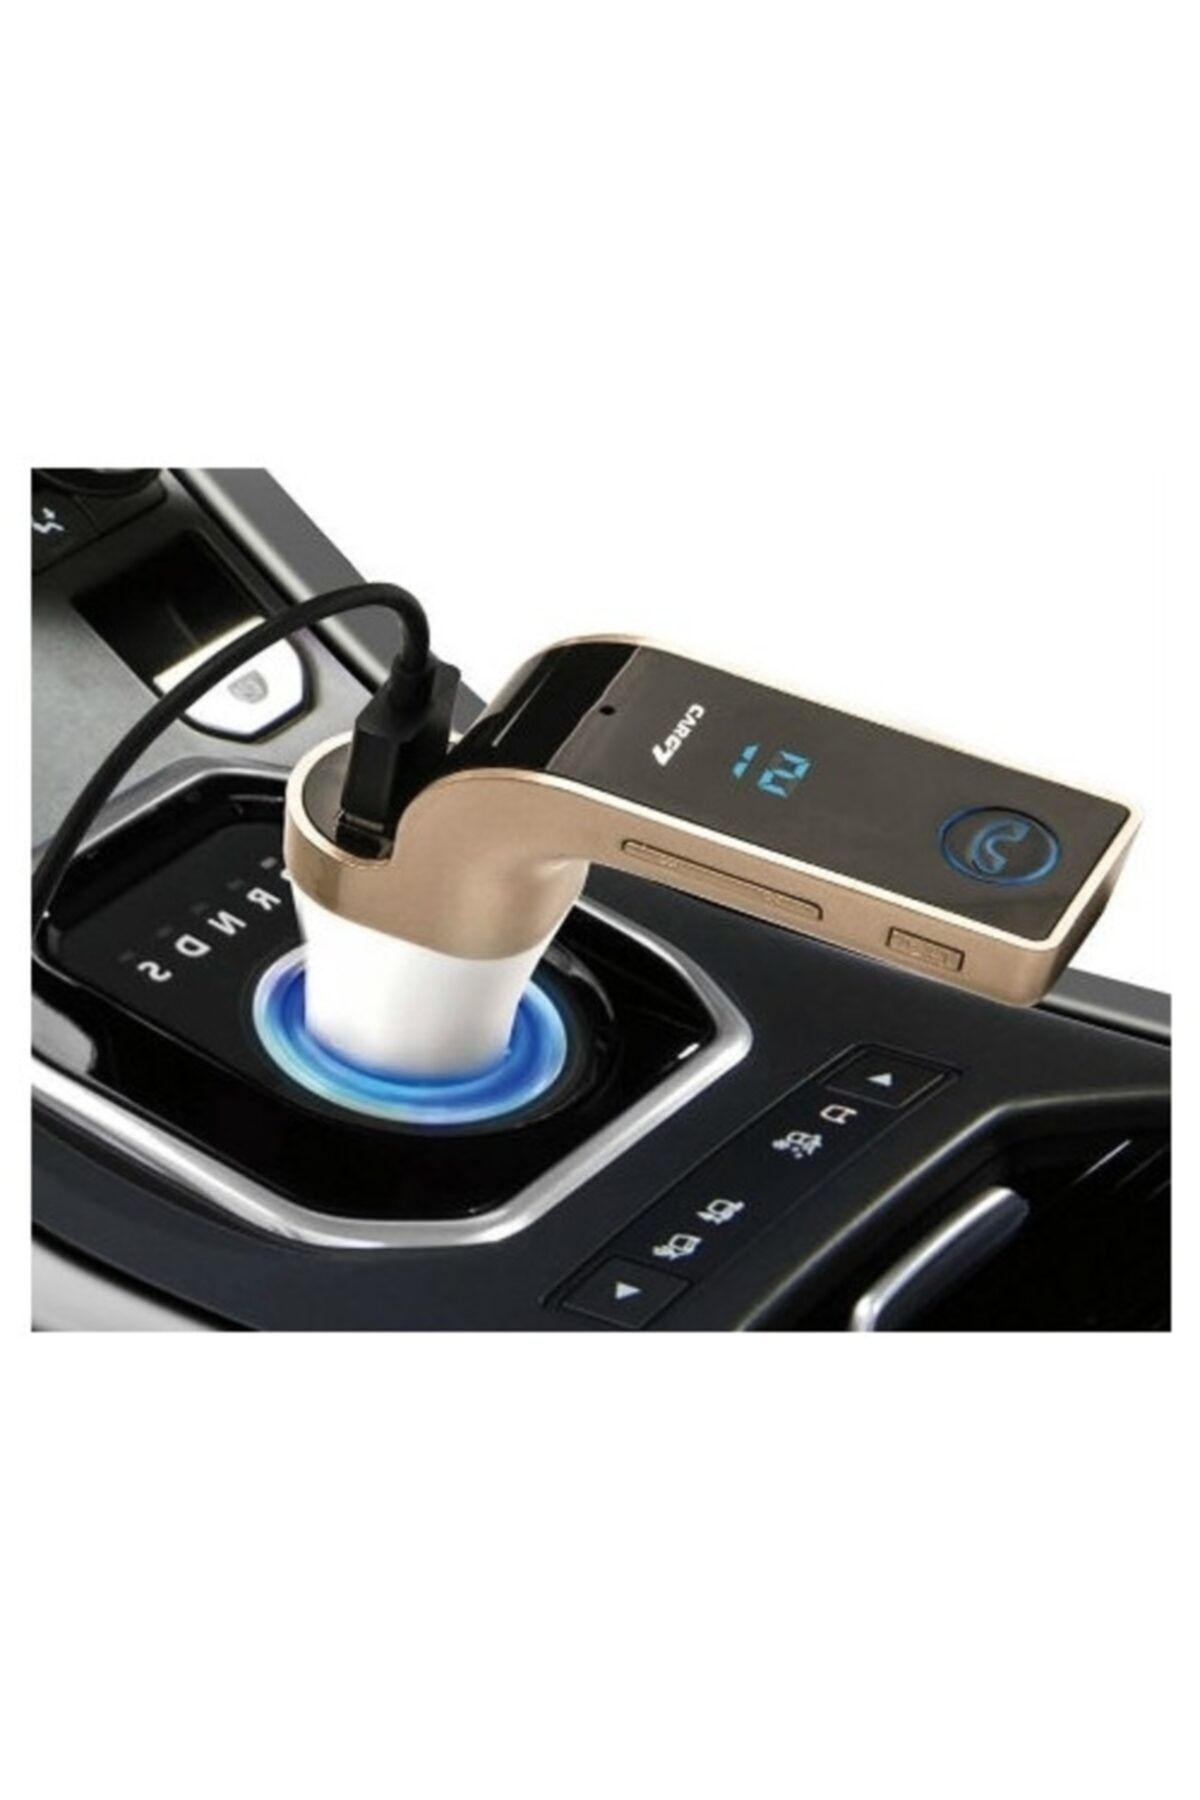 HESCOM Cars7 Bluetooth 4.0 Araç Kiti Çakmaklık Mp3 Fm Transmitter